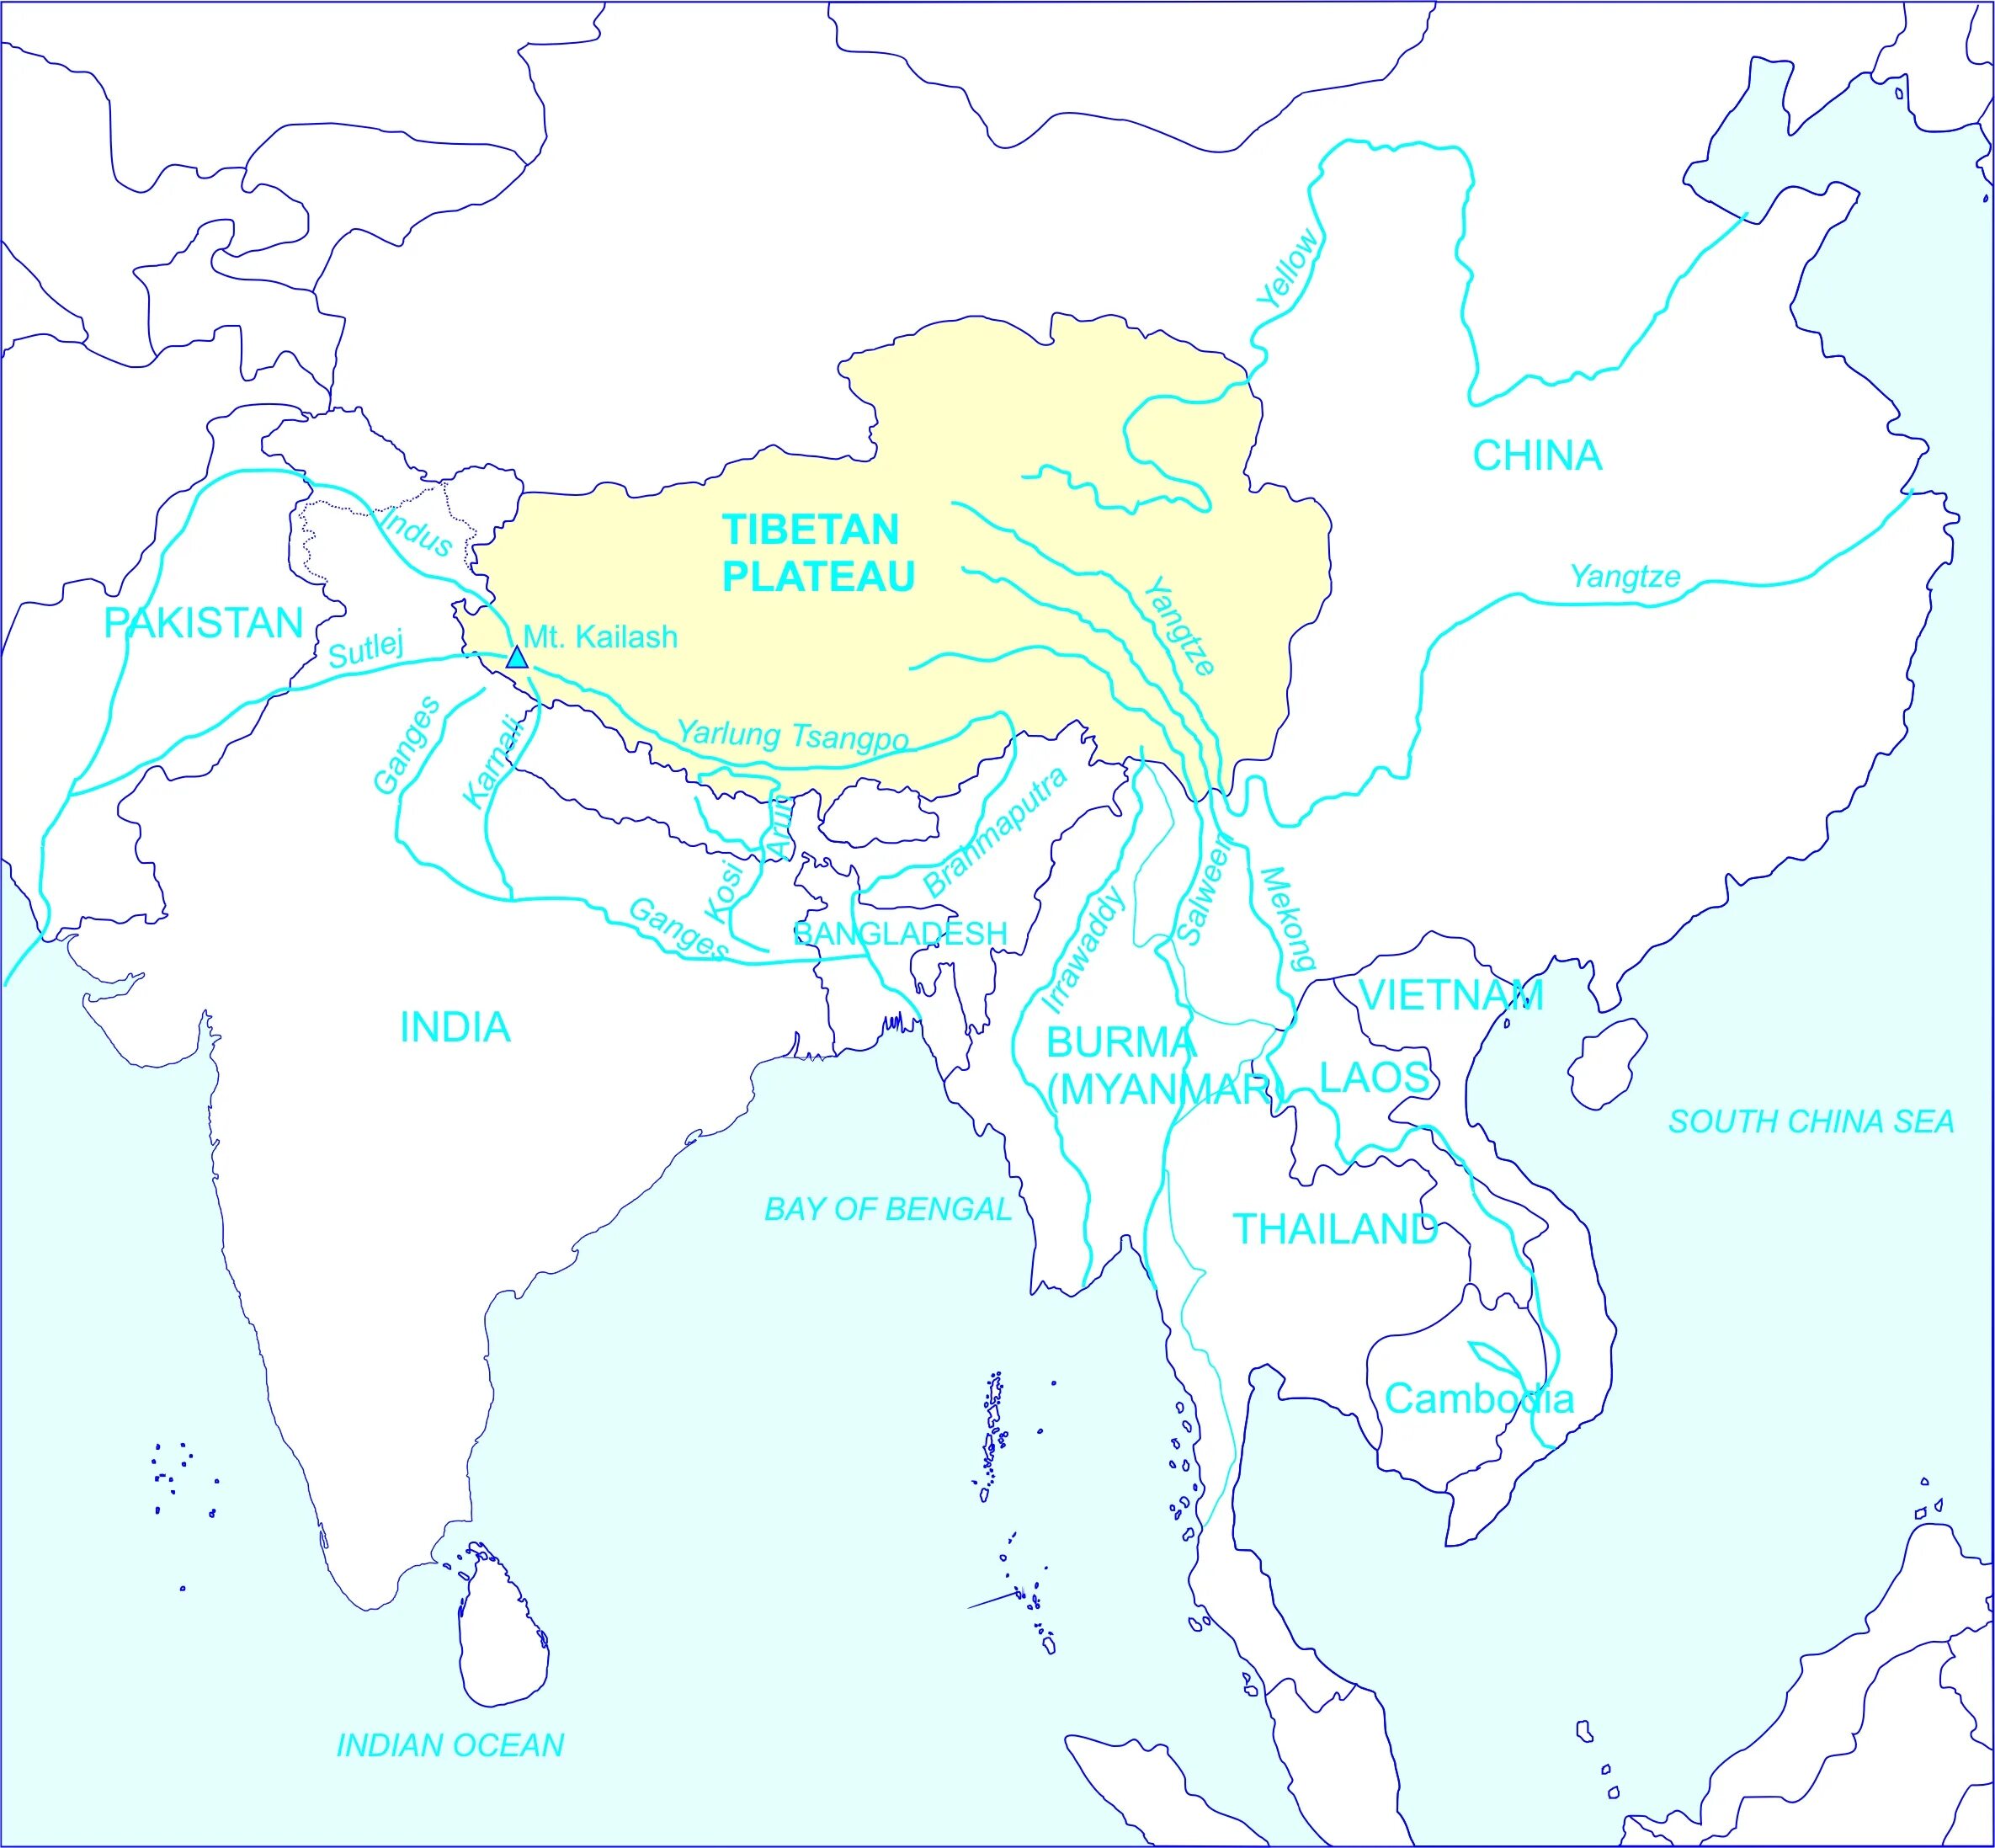 Реки Азии на карте. Основные реки зарубежной Азии на карте. Крупные реки зарубежной Азии на карте. Крупные реки Азии на карте. Назовите реки азии